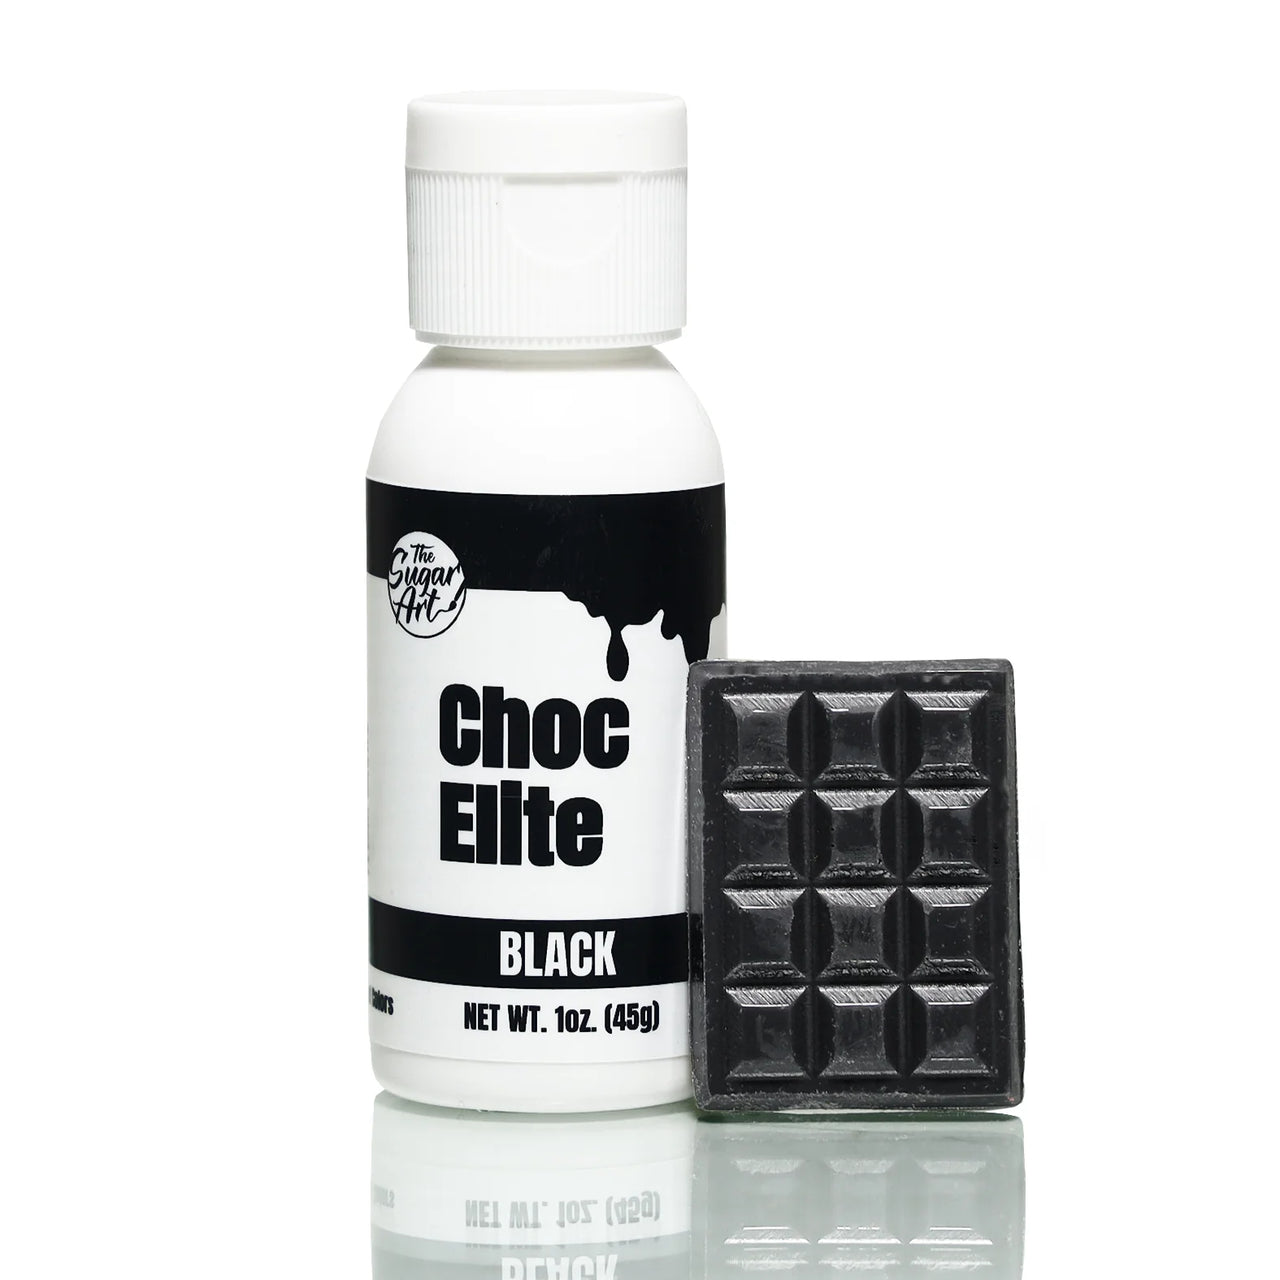 Black Choc Elite 1oz (45g)